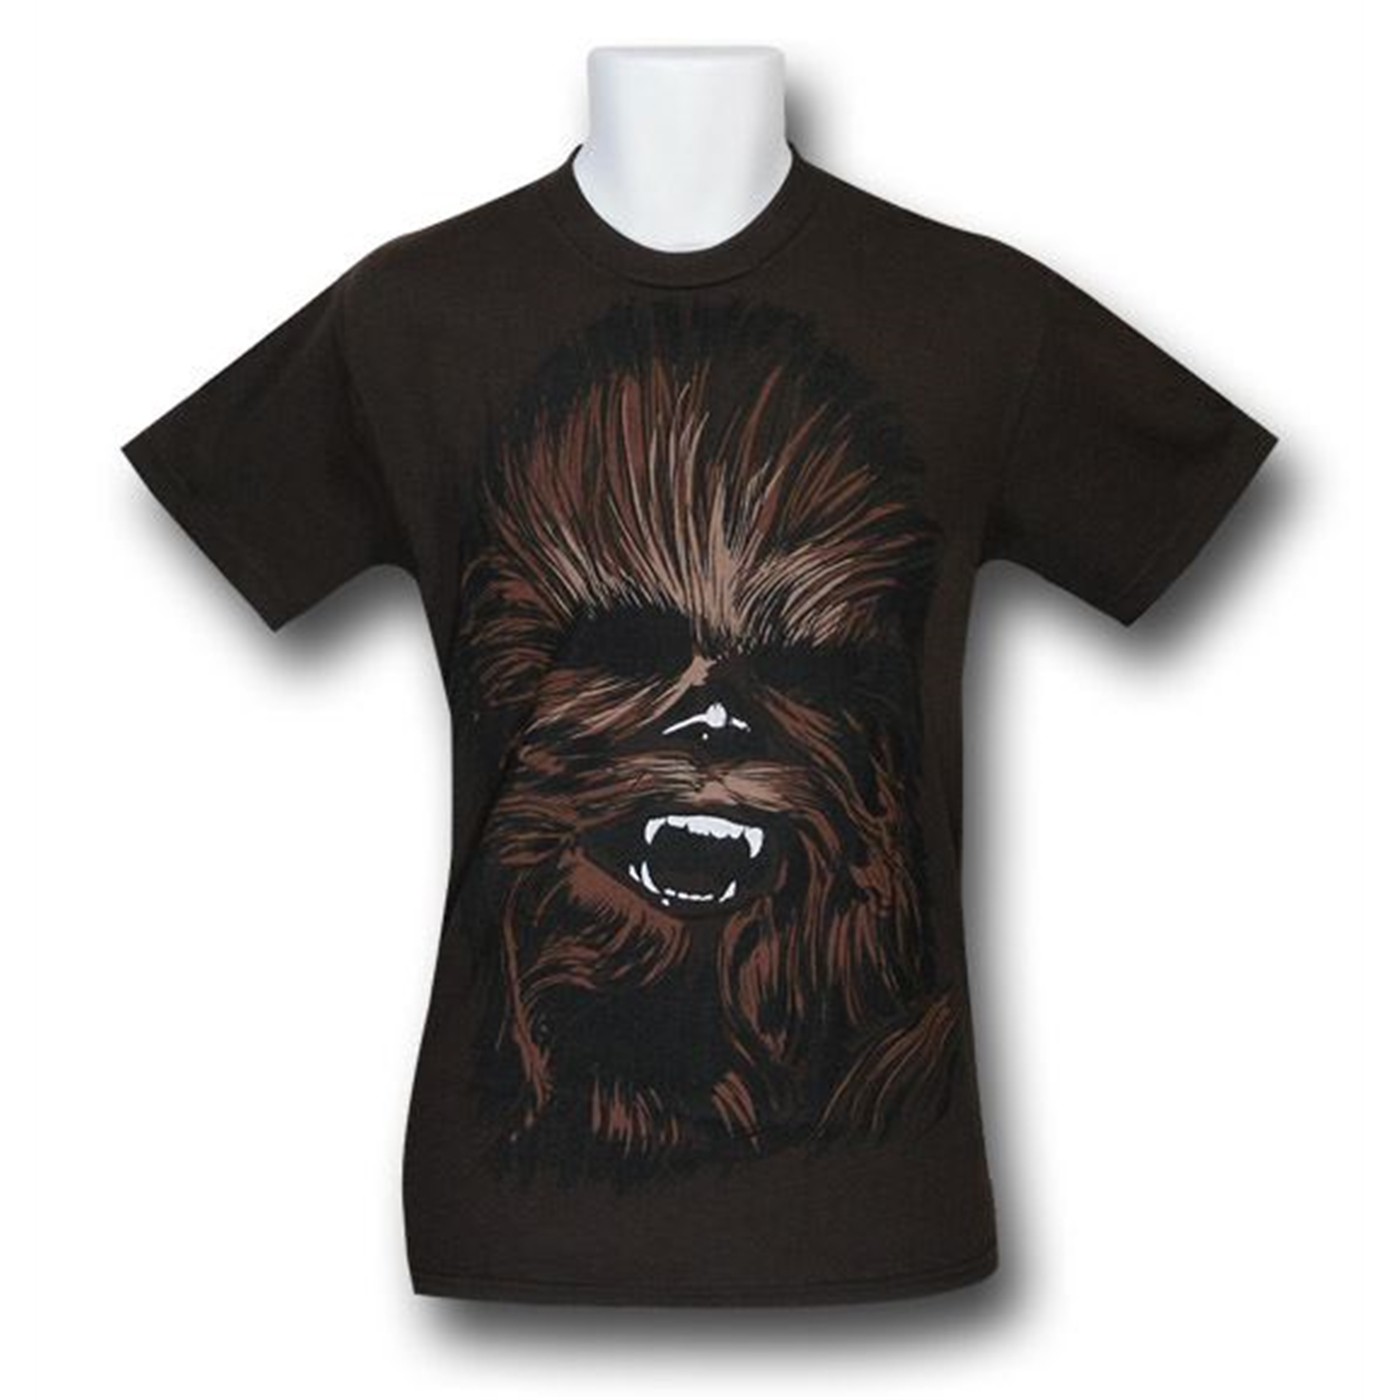 Chewbacca Face T-Shirt